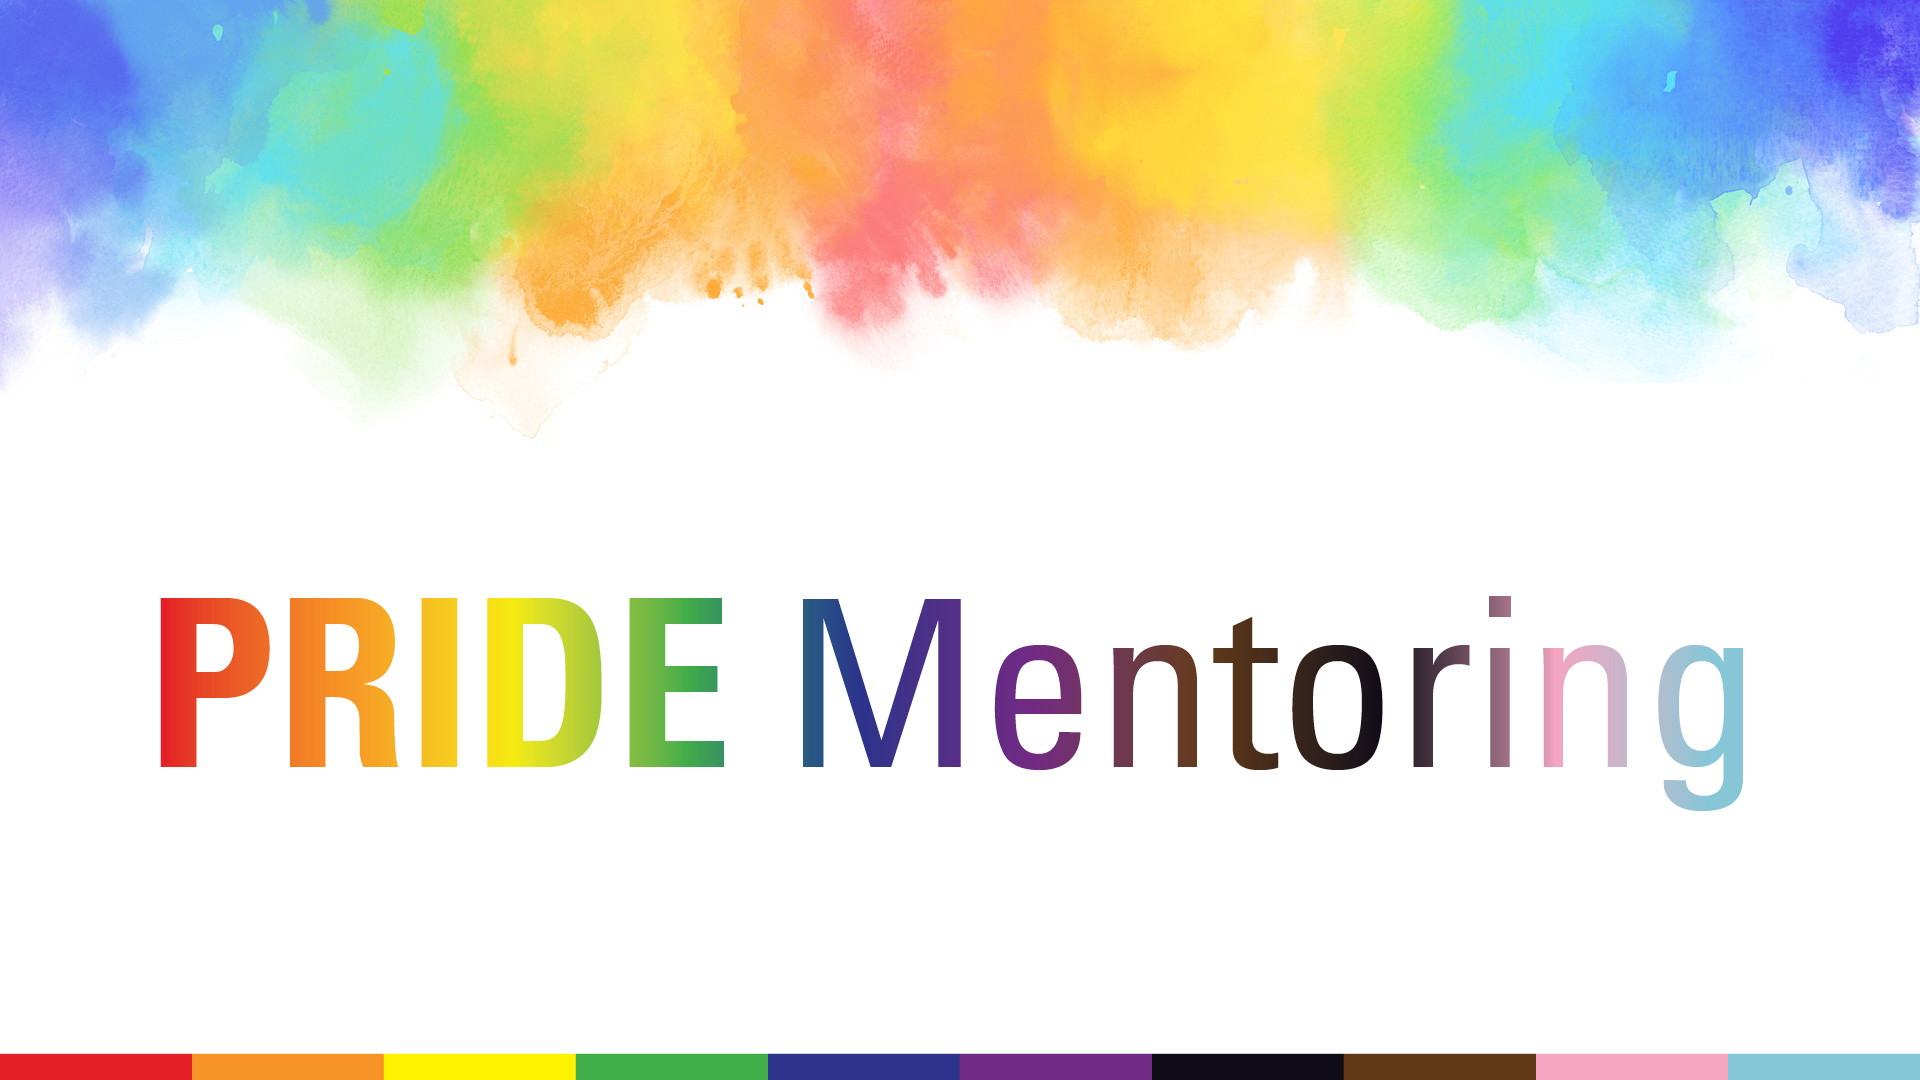 Pride Mentoring